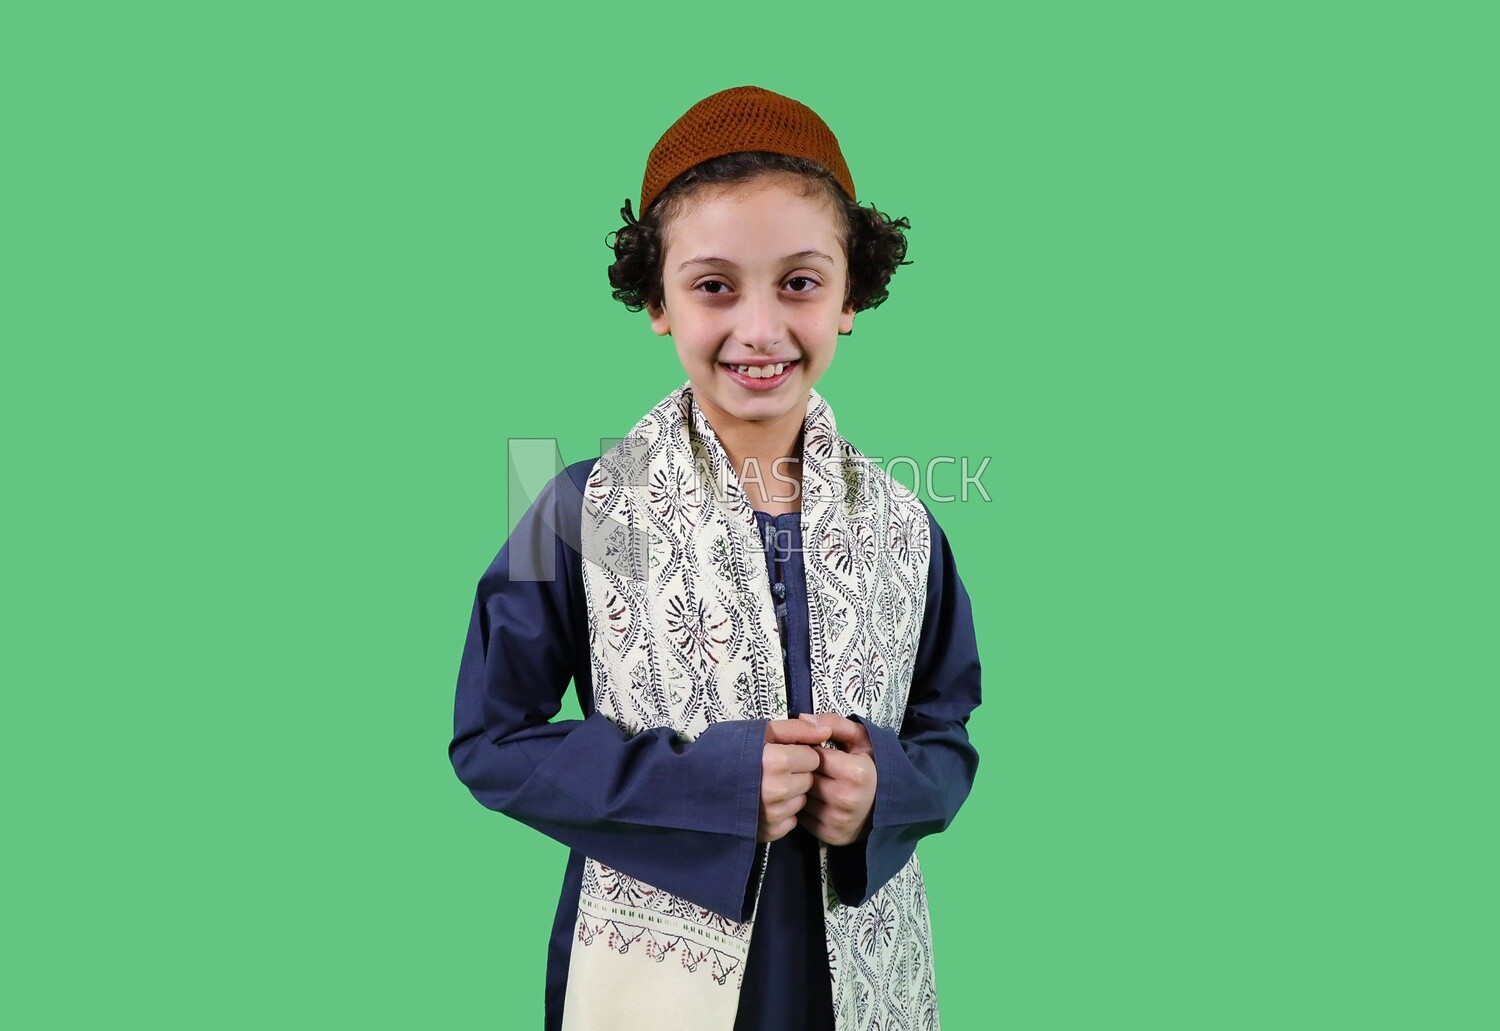 A boy wearing egyptian farmer's clothes